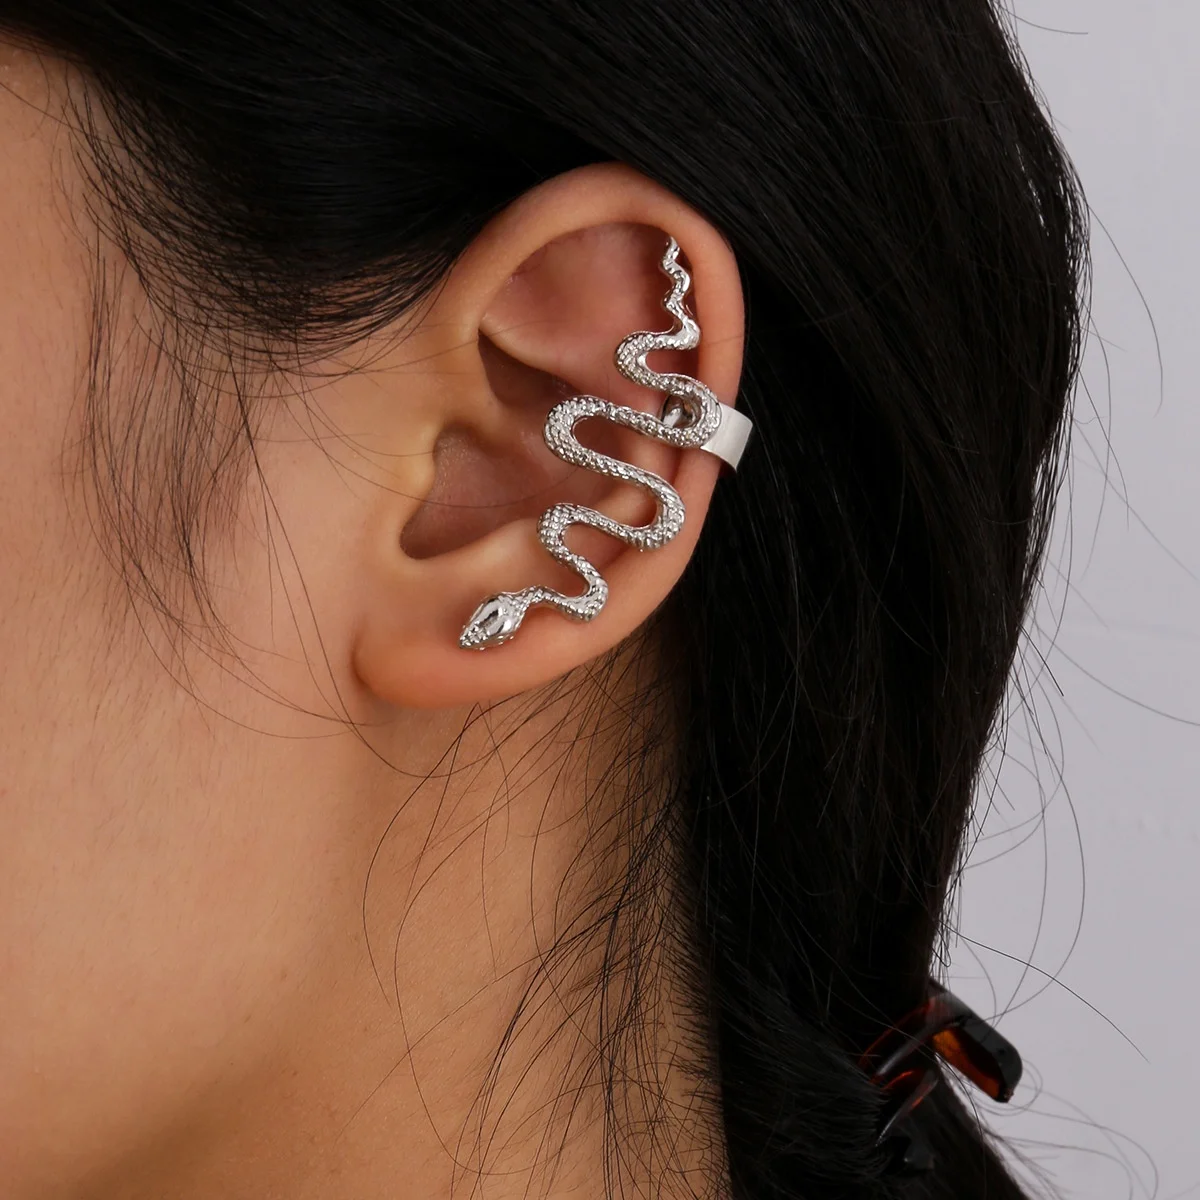 

Punk Hyperbole Cobra Snake Clip Earrings For Women Men Vintage Animal Shape Left Right Ear Jewelry Friends Gift, Picture shows